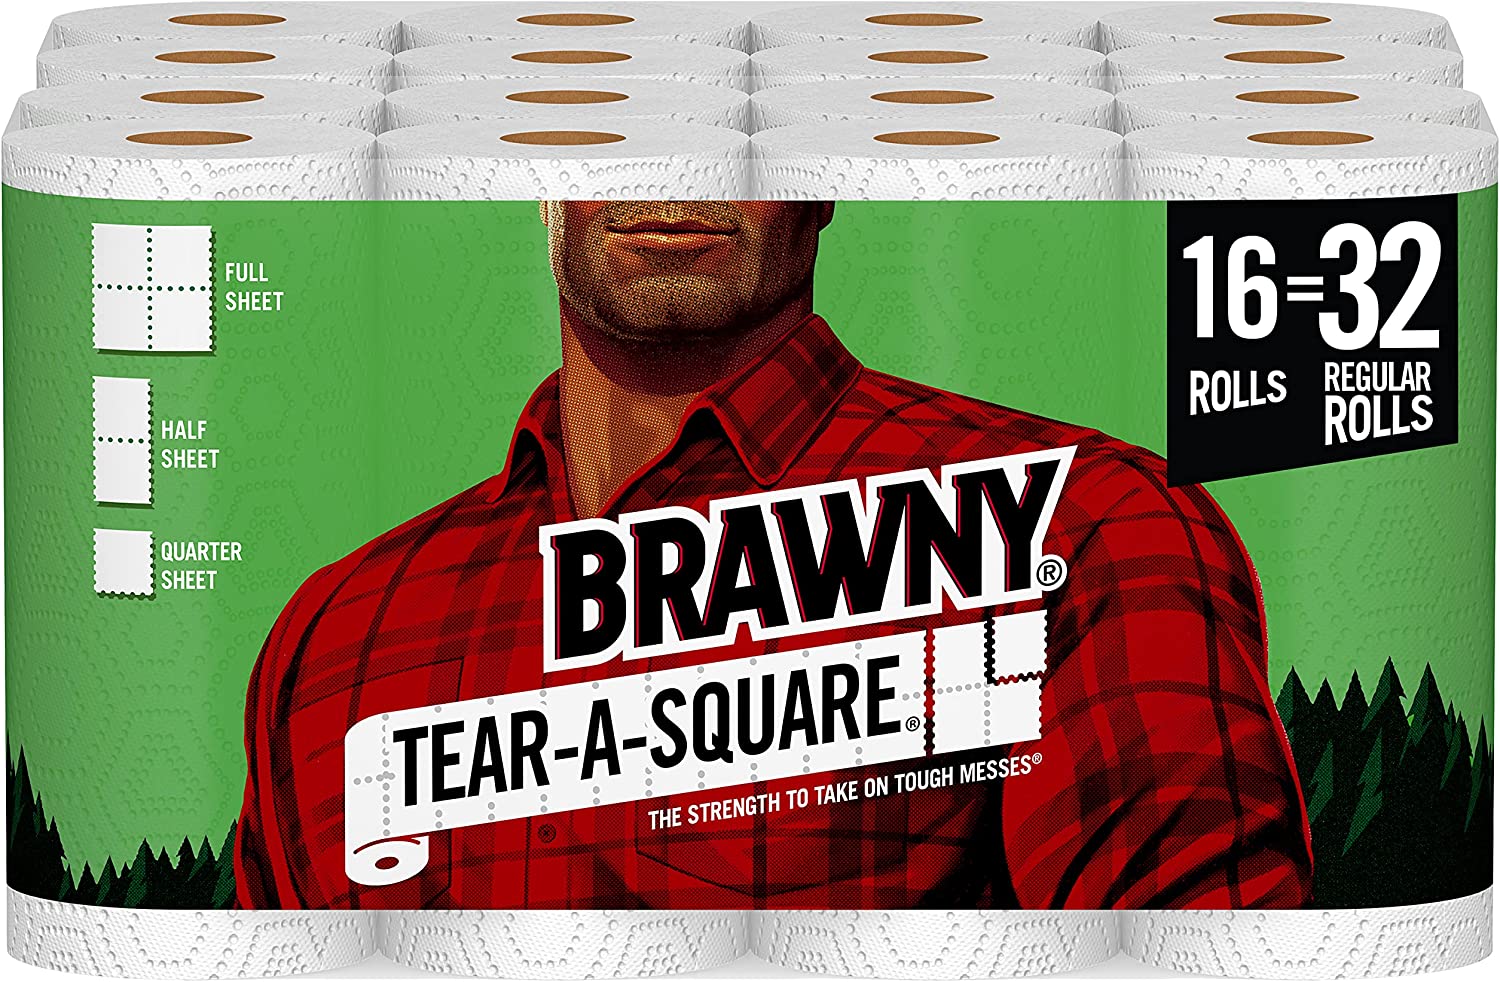 Brawny Tear-A-Square Paper Towels Logo